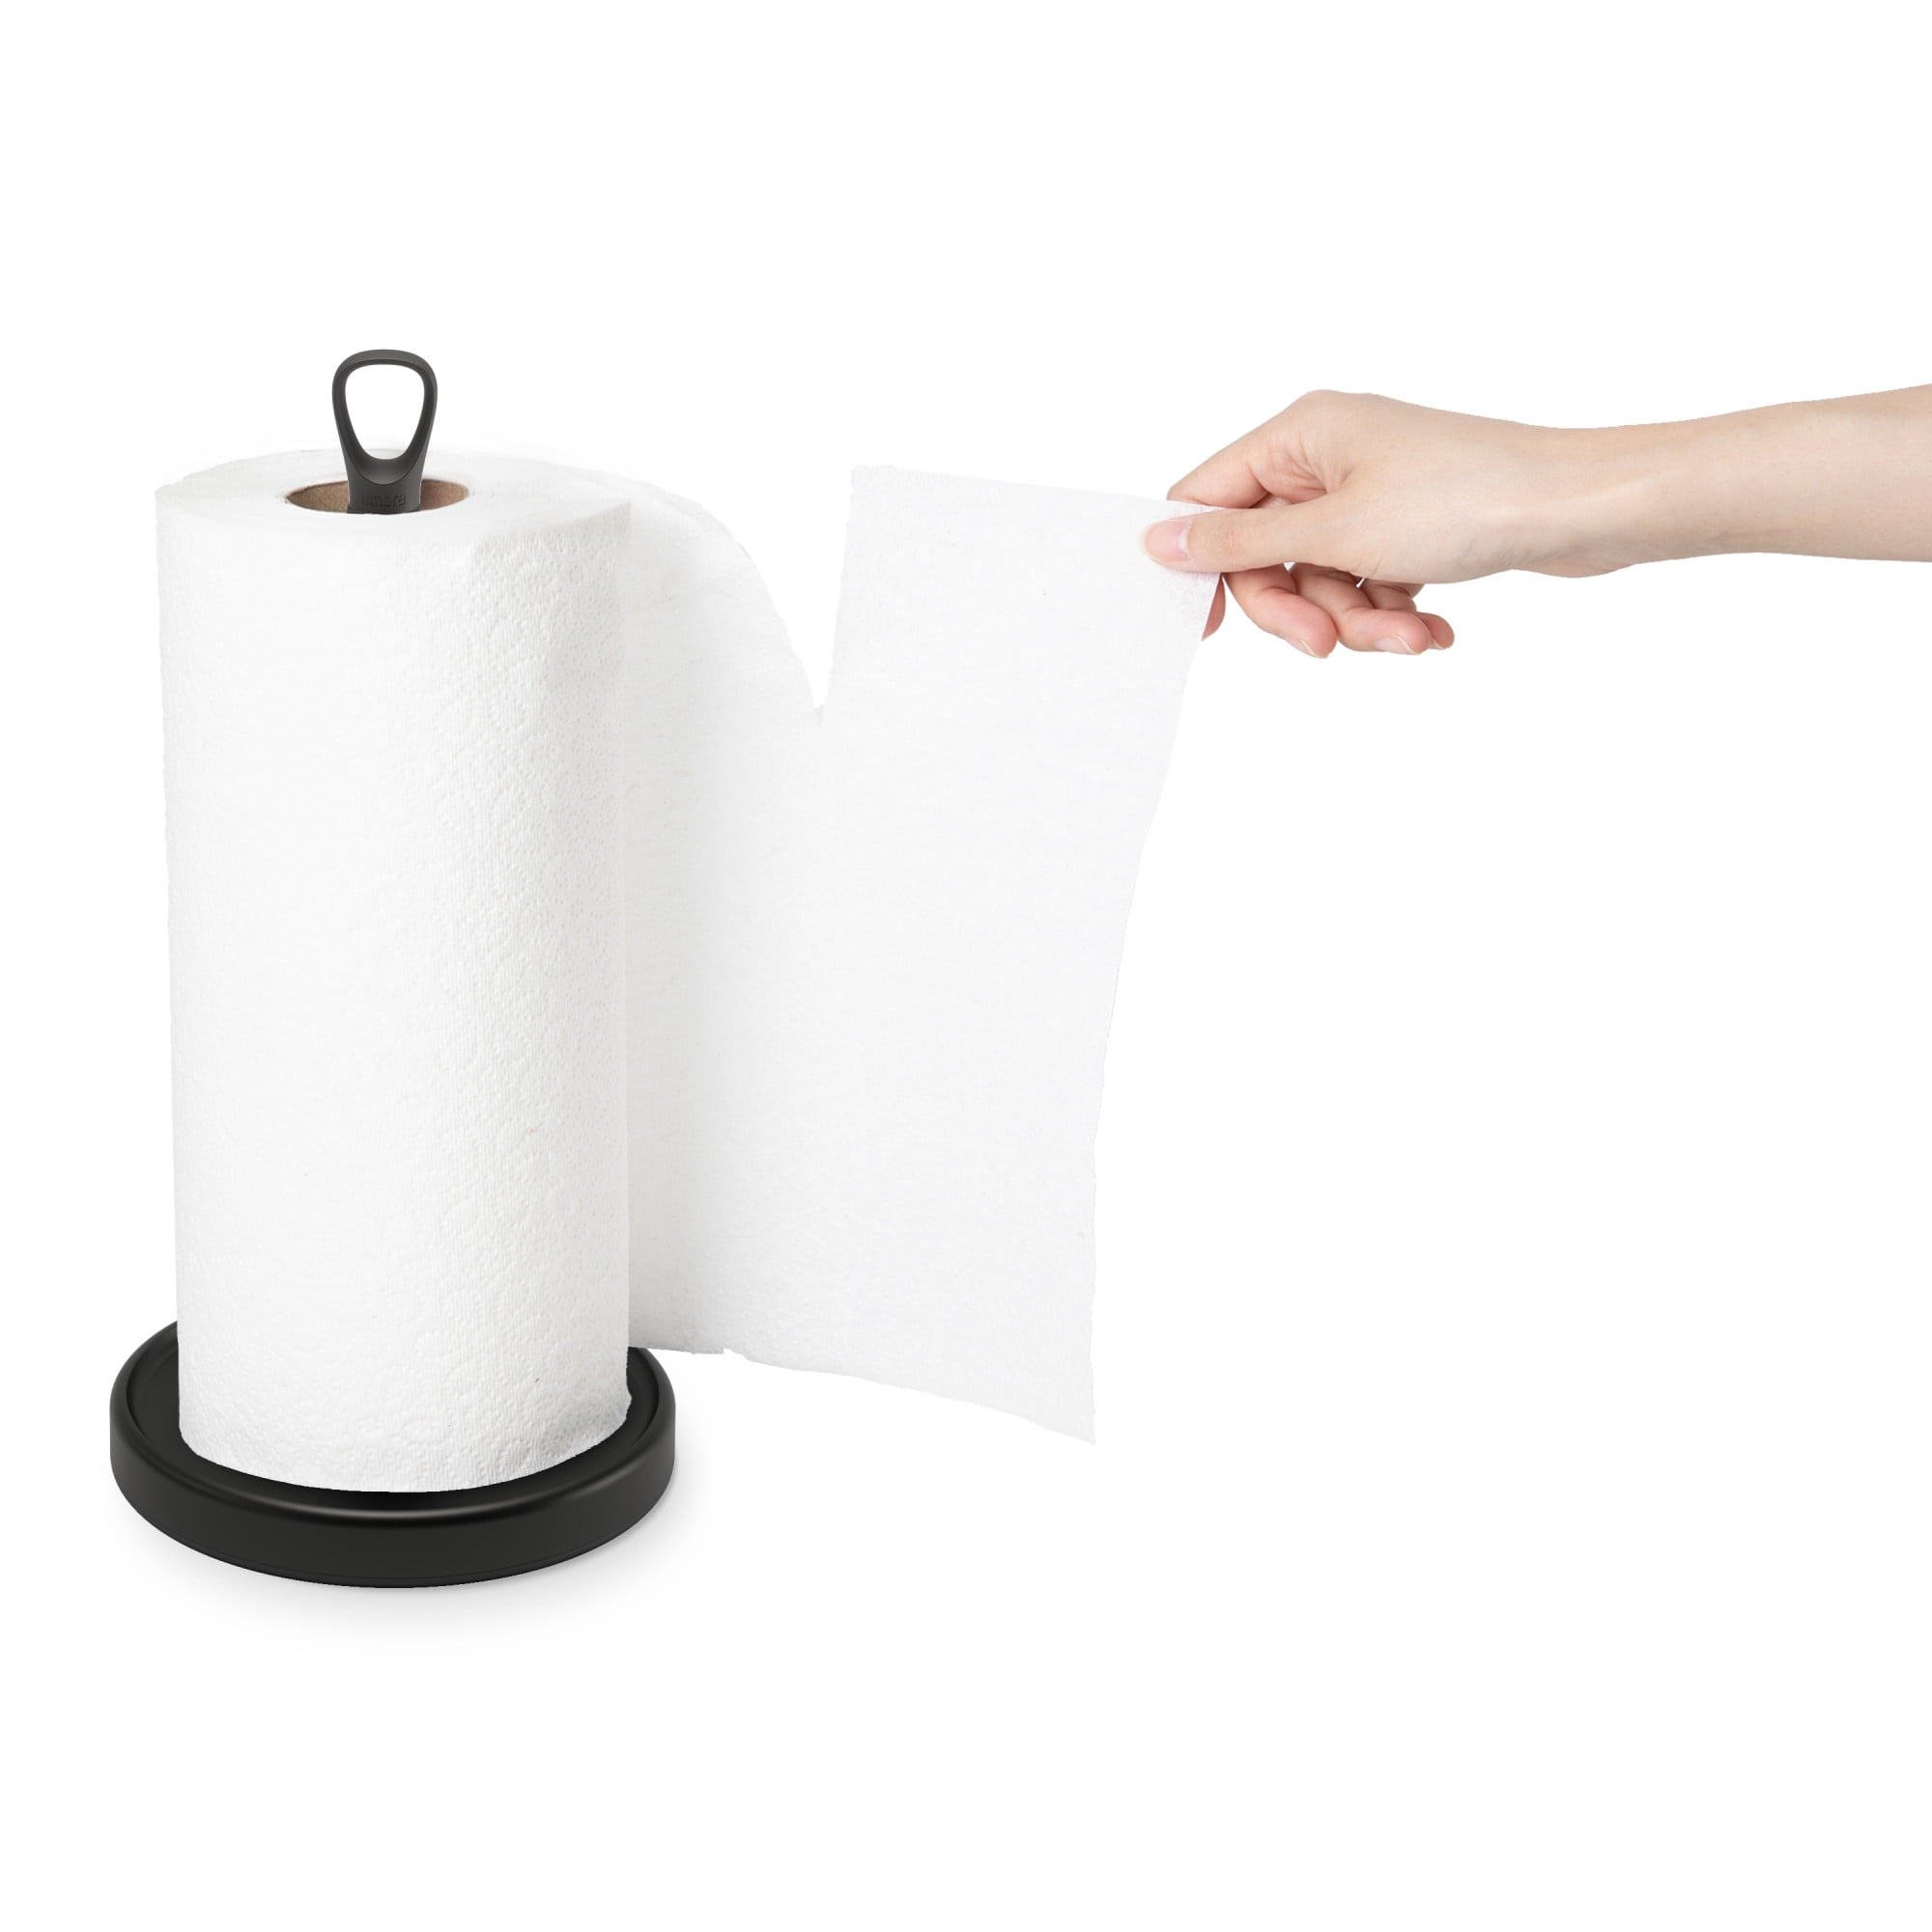 Umbra Ribbon Paper Towel Holder